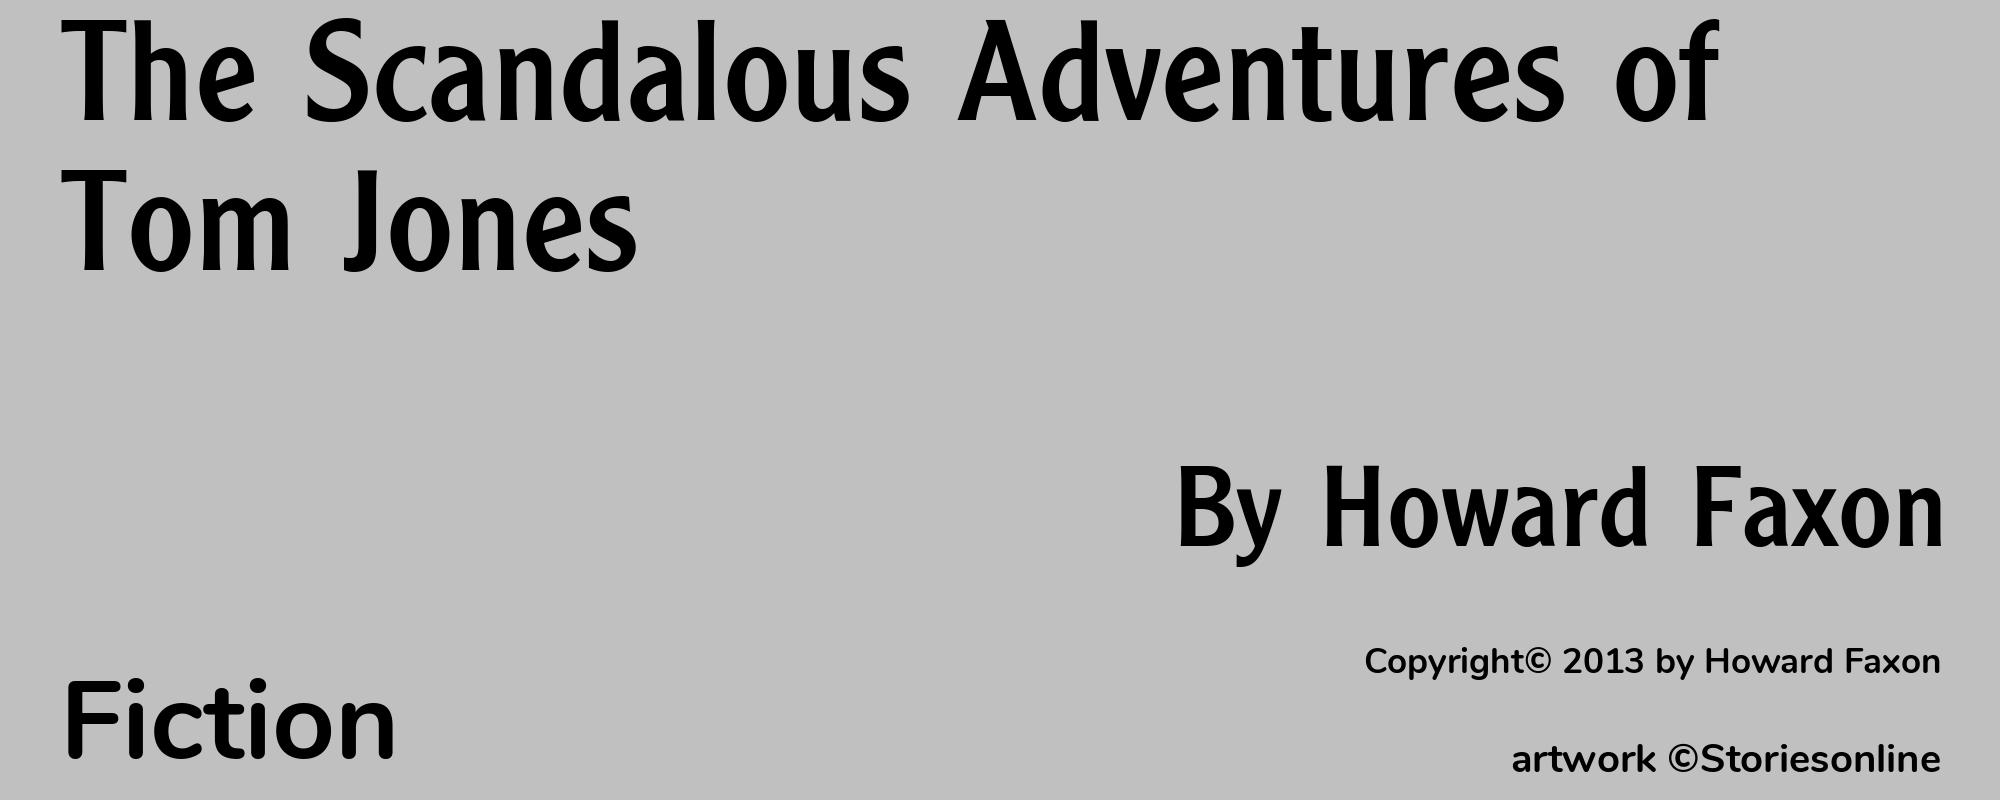 The Scandalous Adventures of Tom Jones - Cover